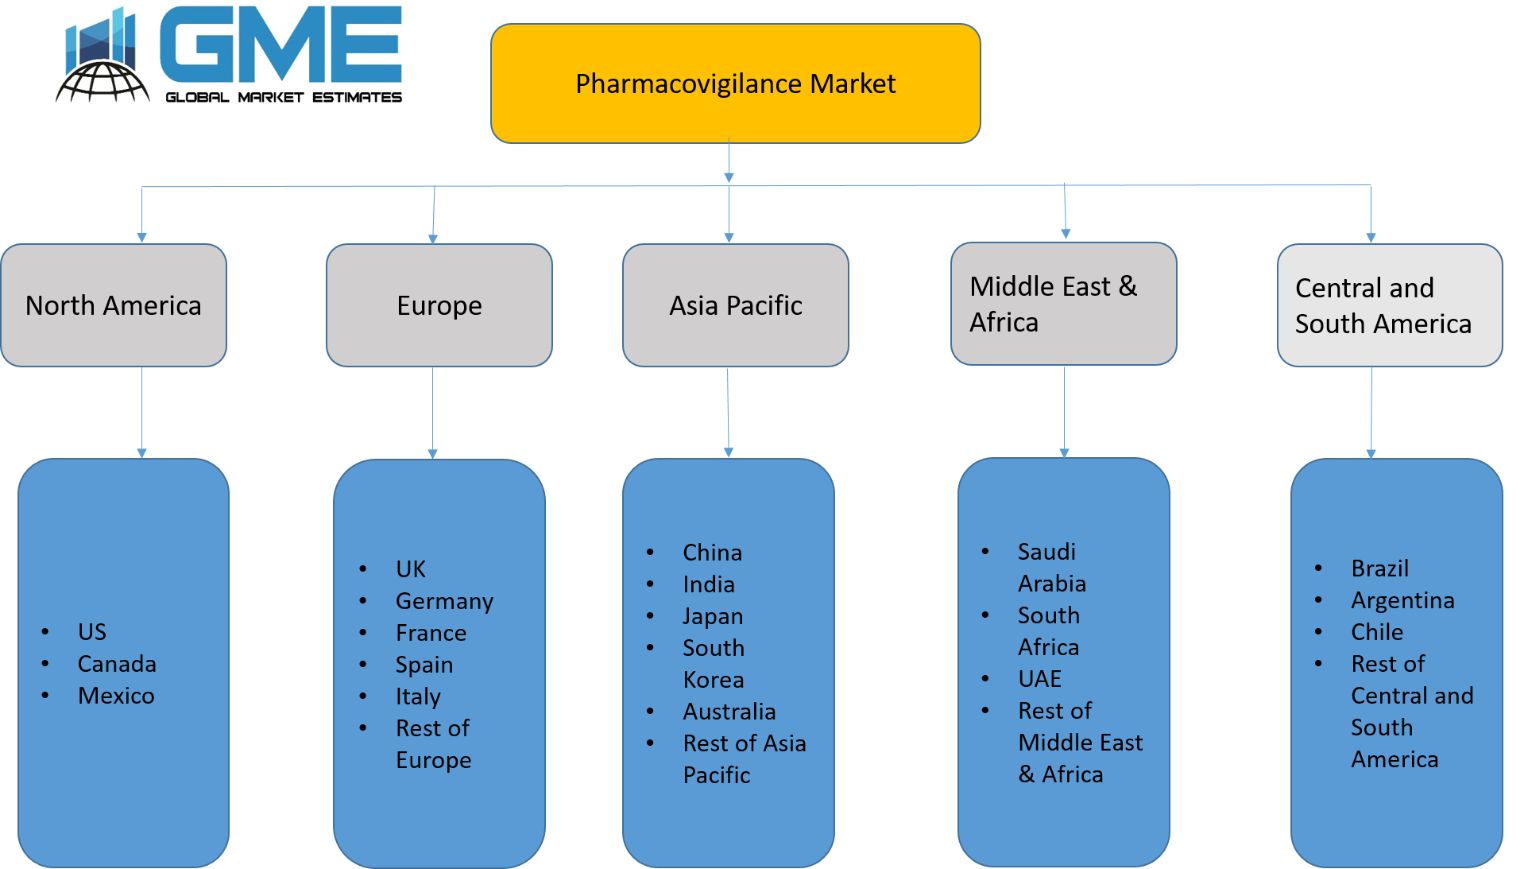 Pharmacovigilance Market - Regional Analysis